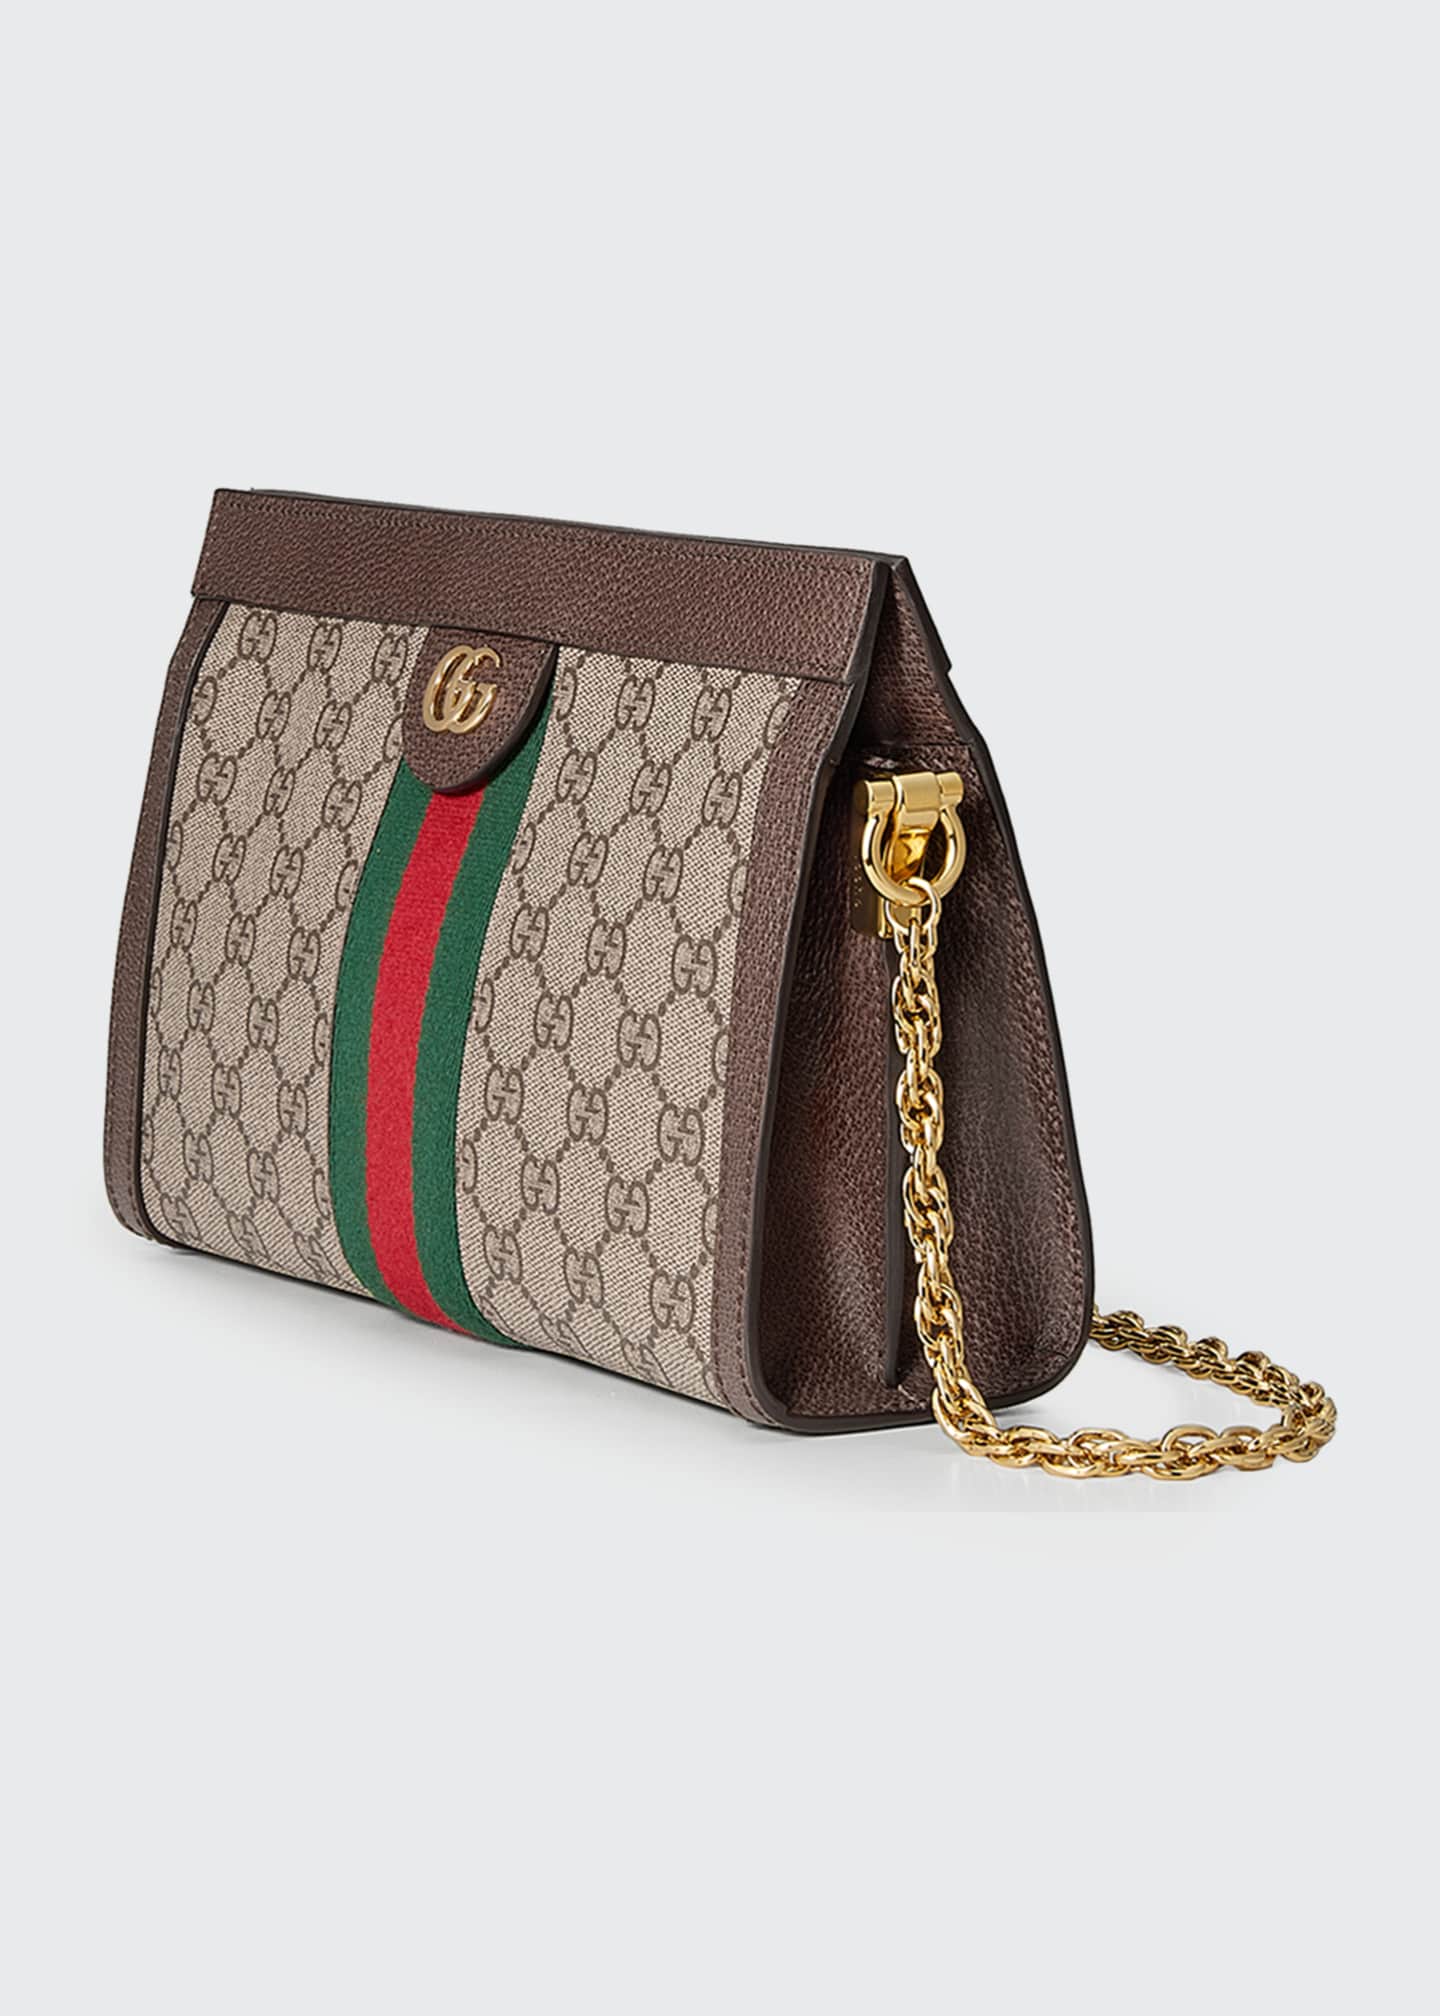 Gucci Ophidia Linea Dragoni Small GG Supreme Canvas Chain Shoulder Bag - Bergdorf Goodman